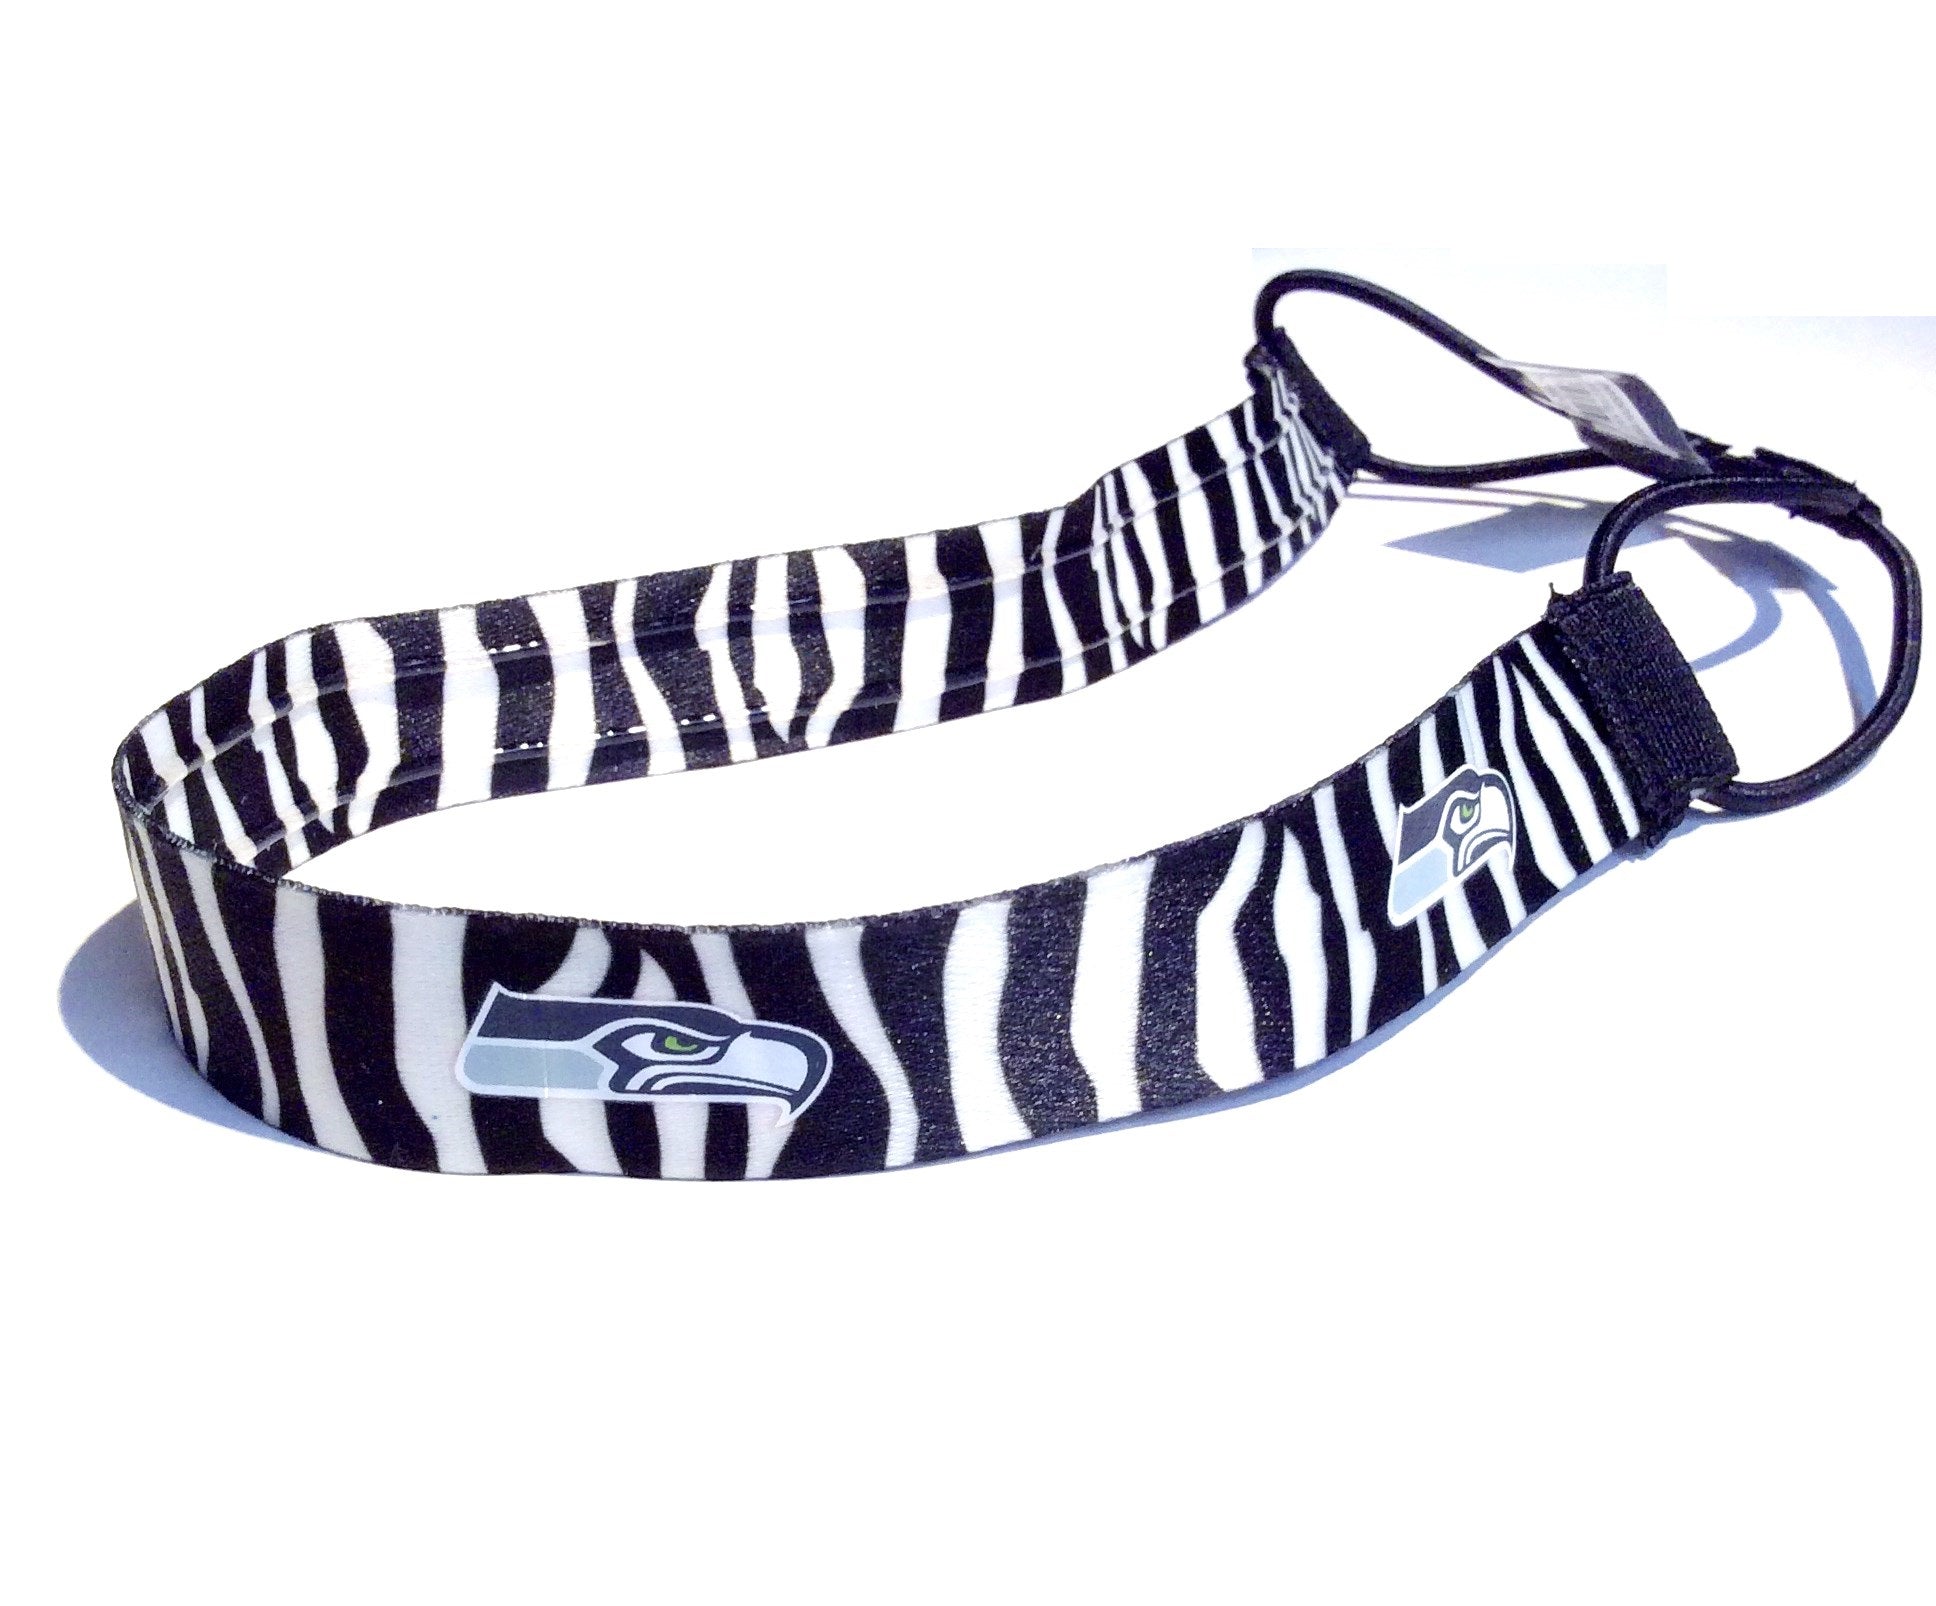 Seahawks Zebra Print Headband #94-362863